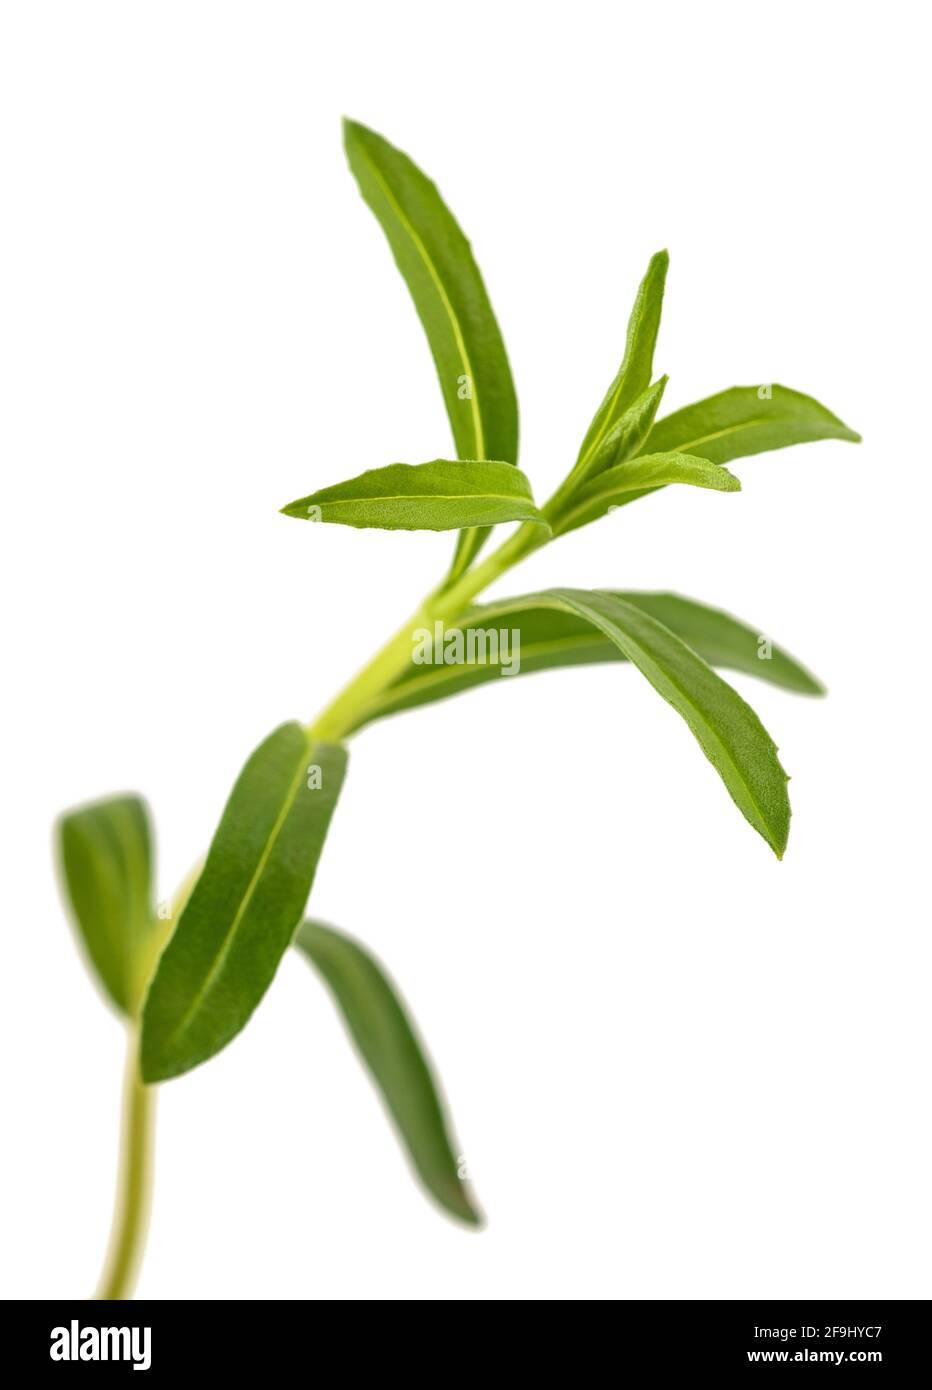 Summer Savory sprig isolated on white background Stock Photo